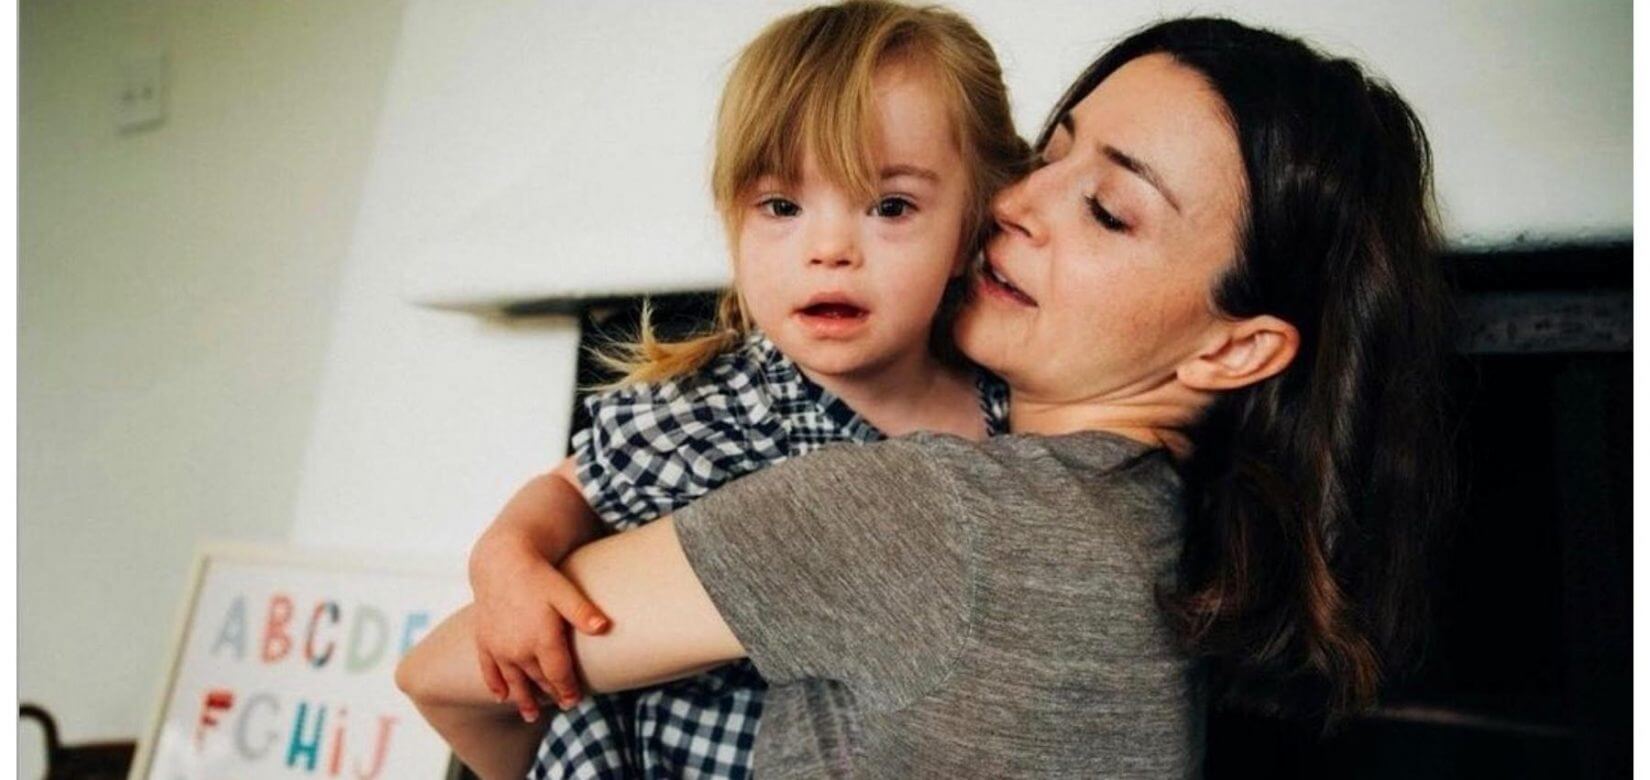 Caterina Scorsone: "H κόρη μου γεννήθηκε με σύνδρομο Down και είναι τέλεια ακριβώς όπως είναι"